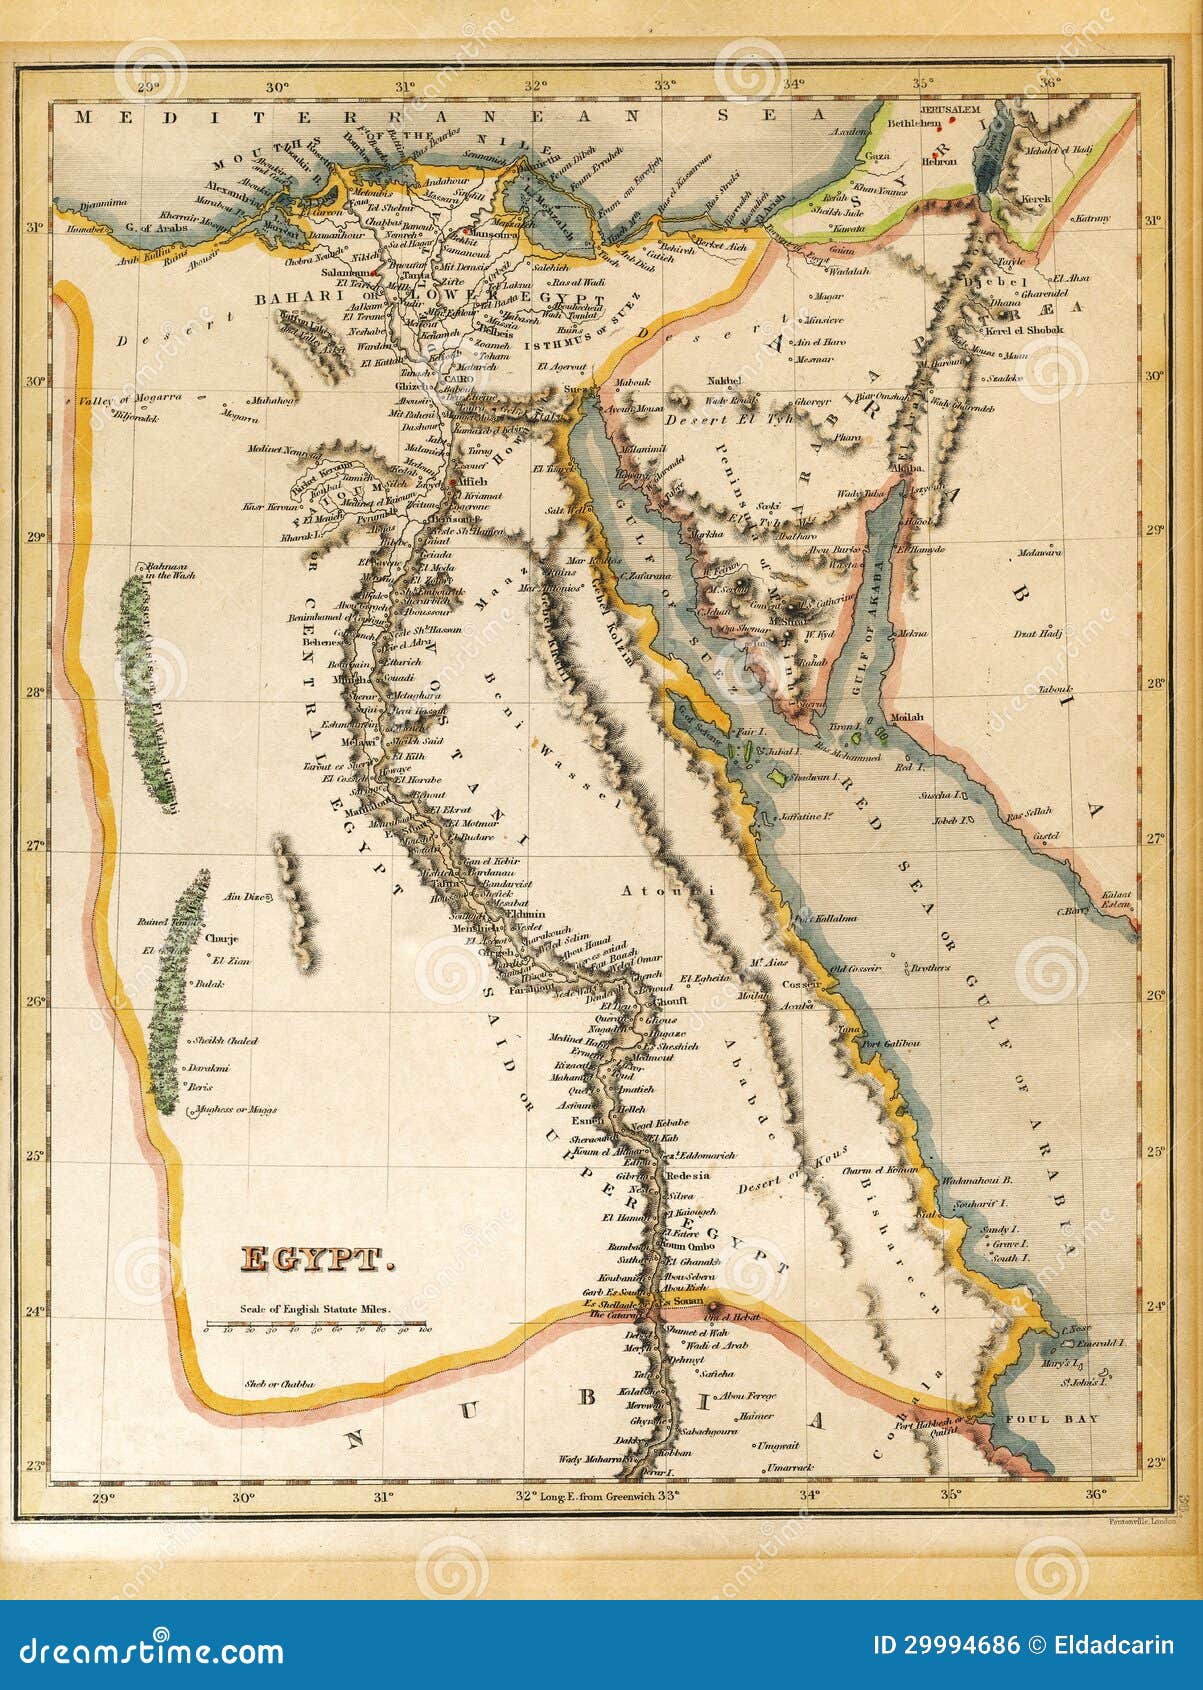 19th century egypt map